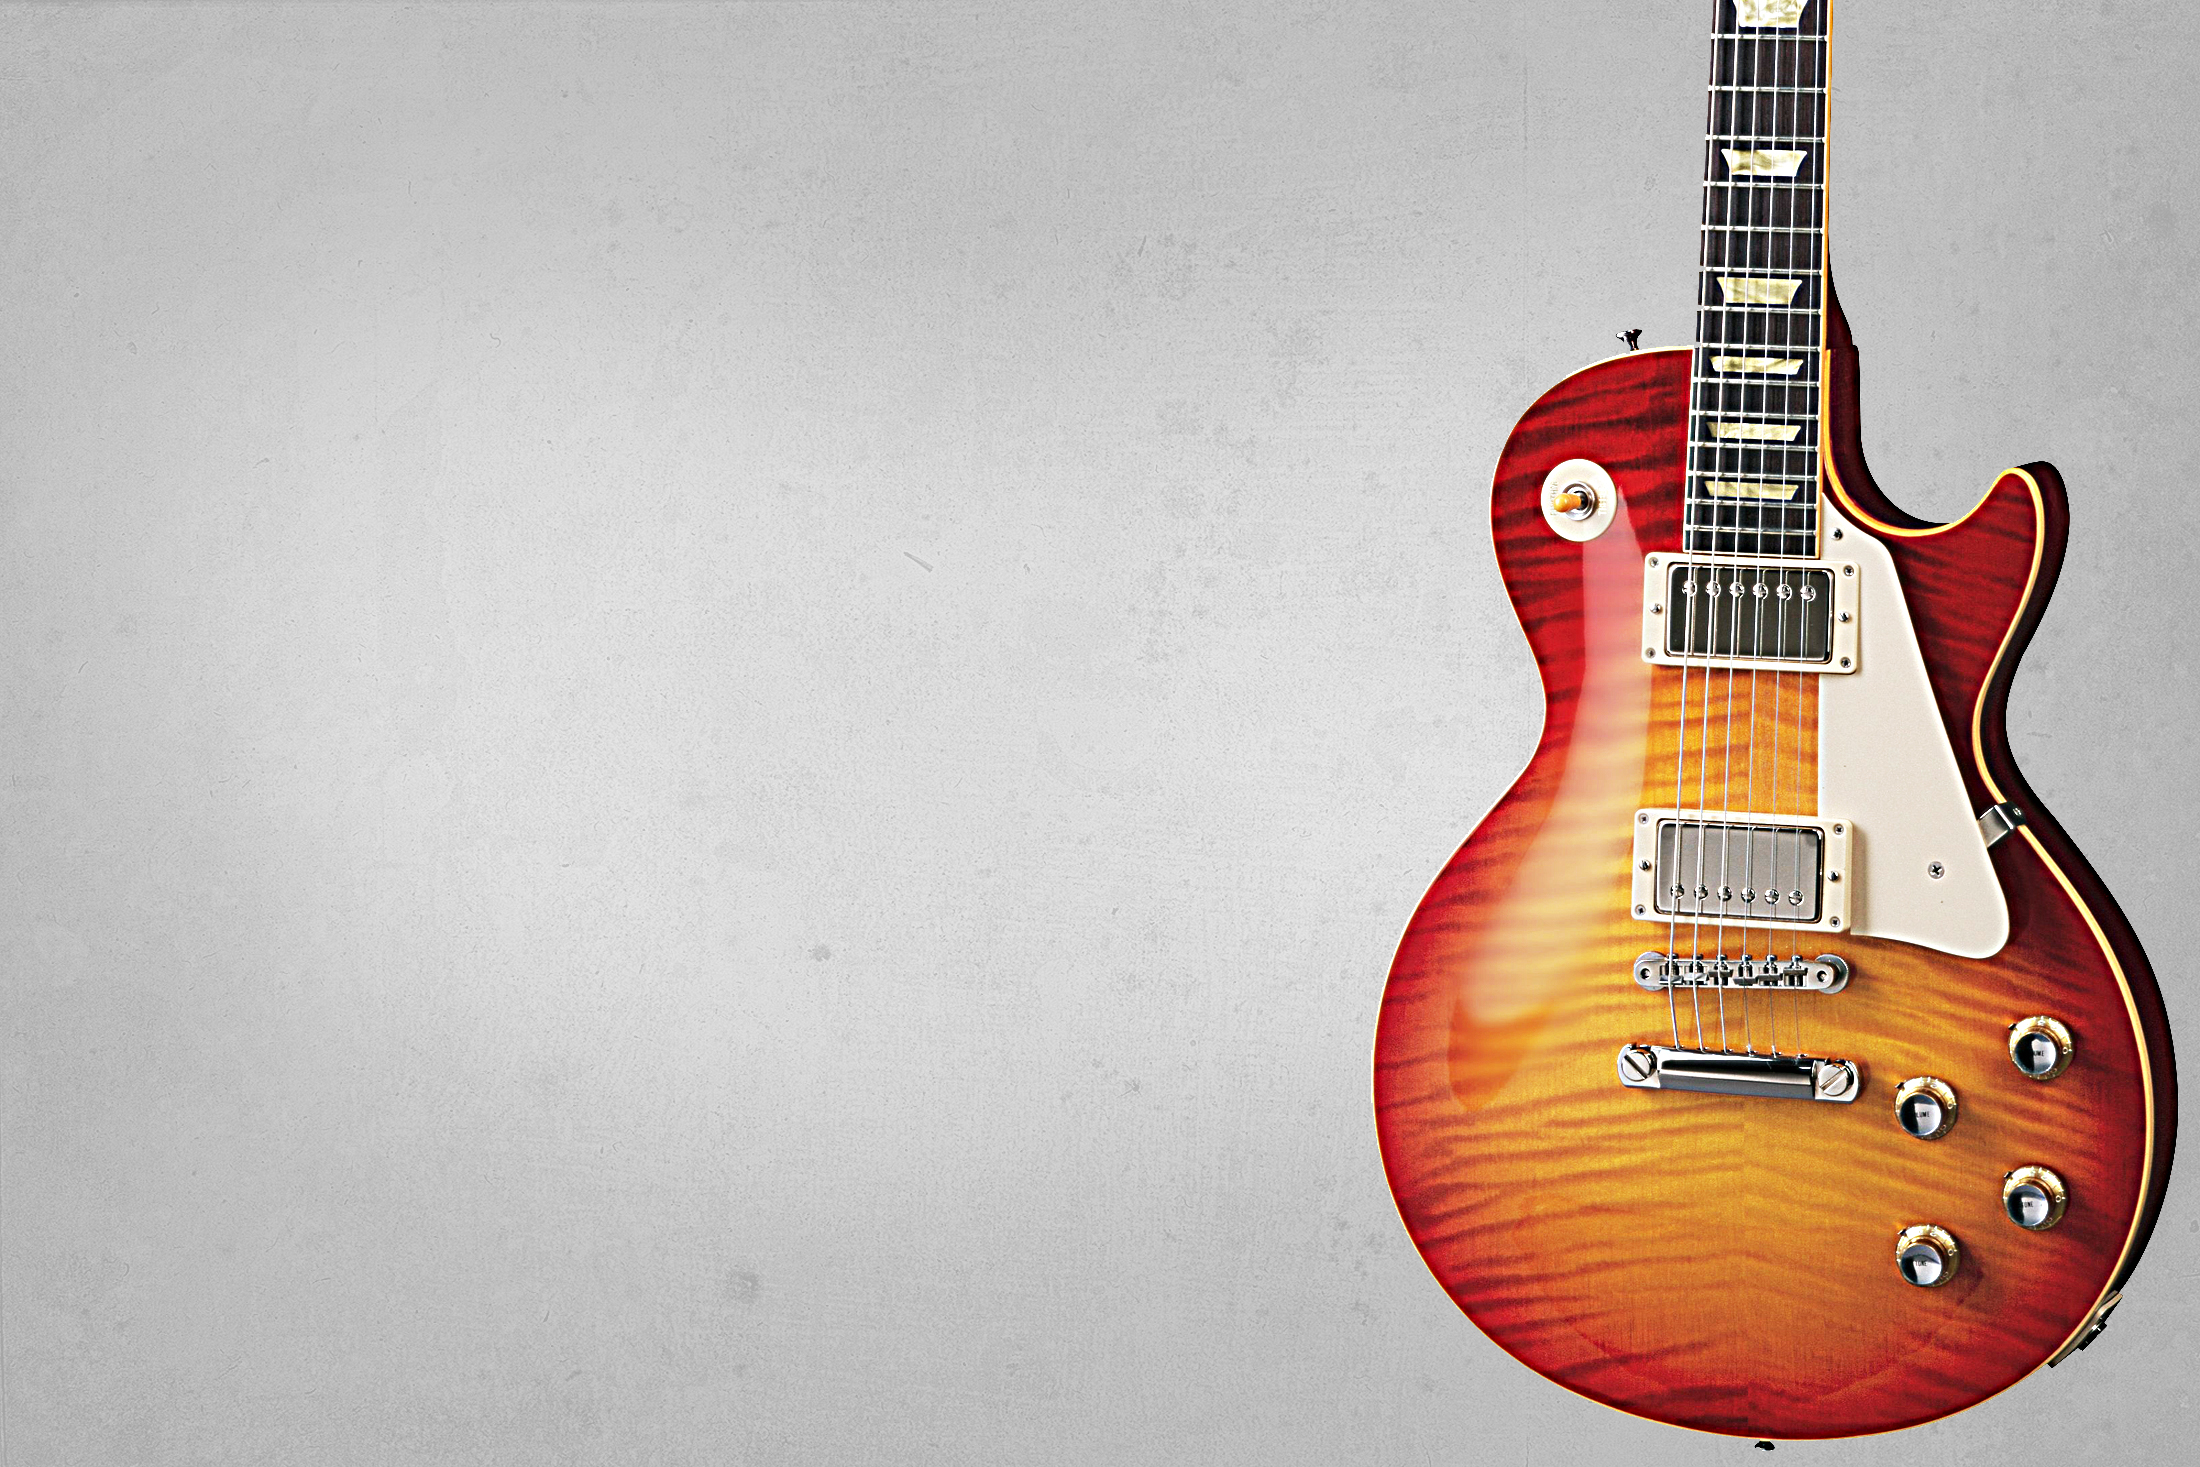 Gibson Les Paul Wallpaper Wide HD